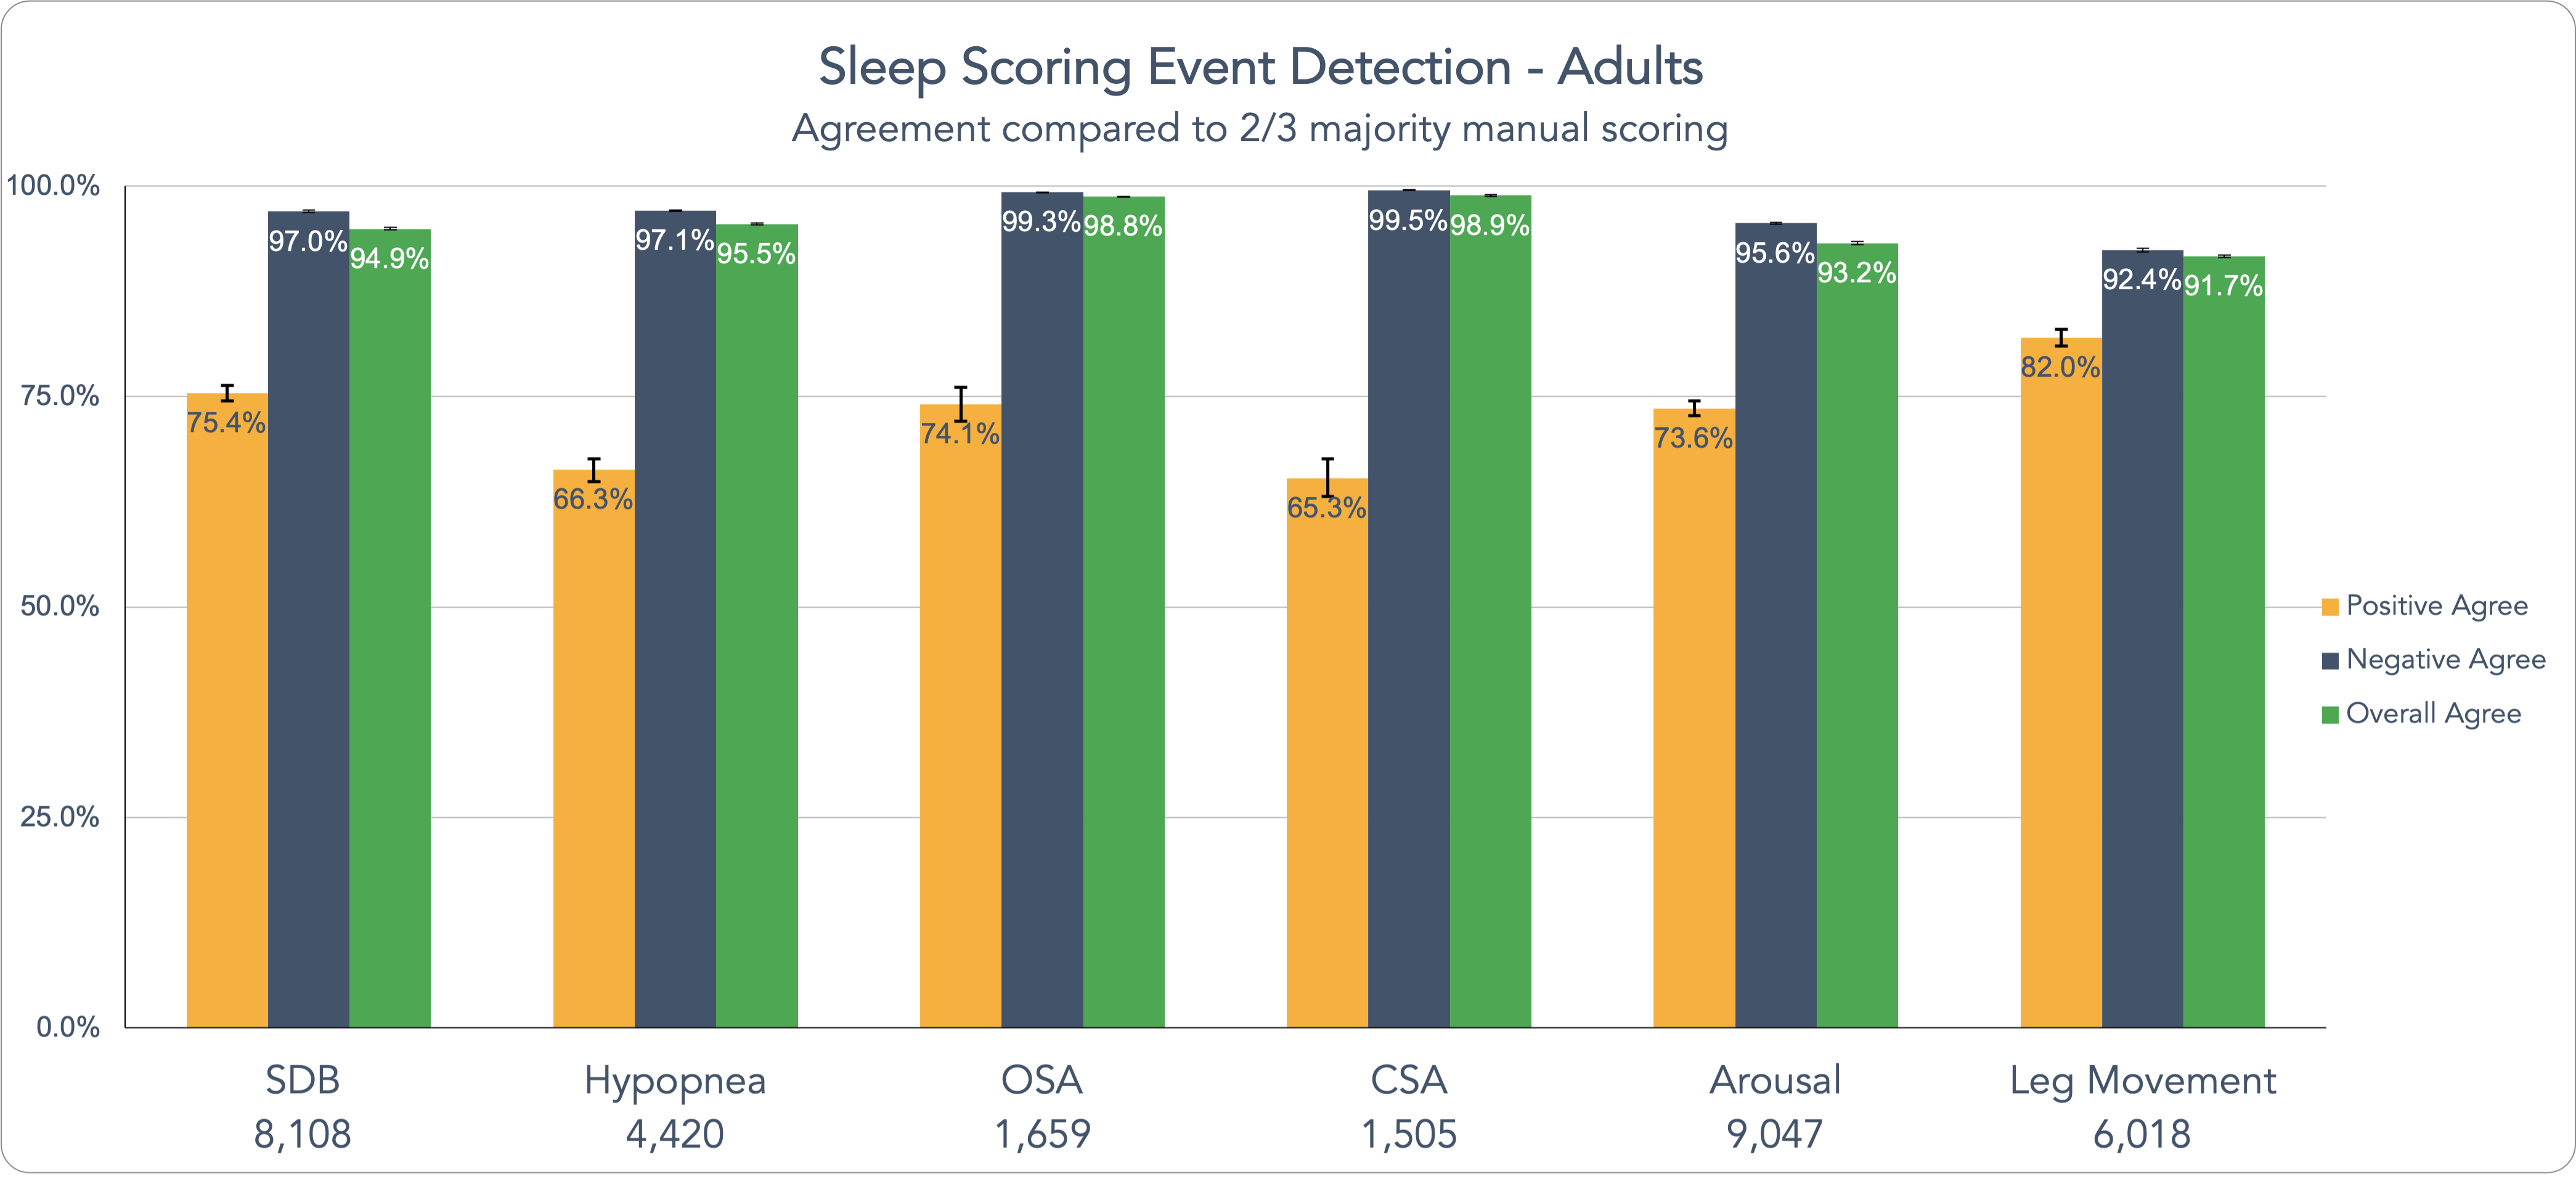 Sleep Scoring Event Detection - Adults